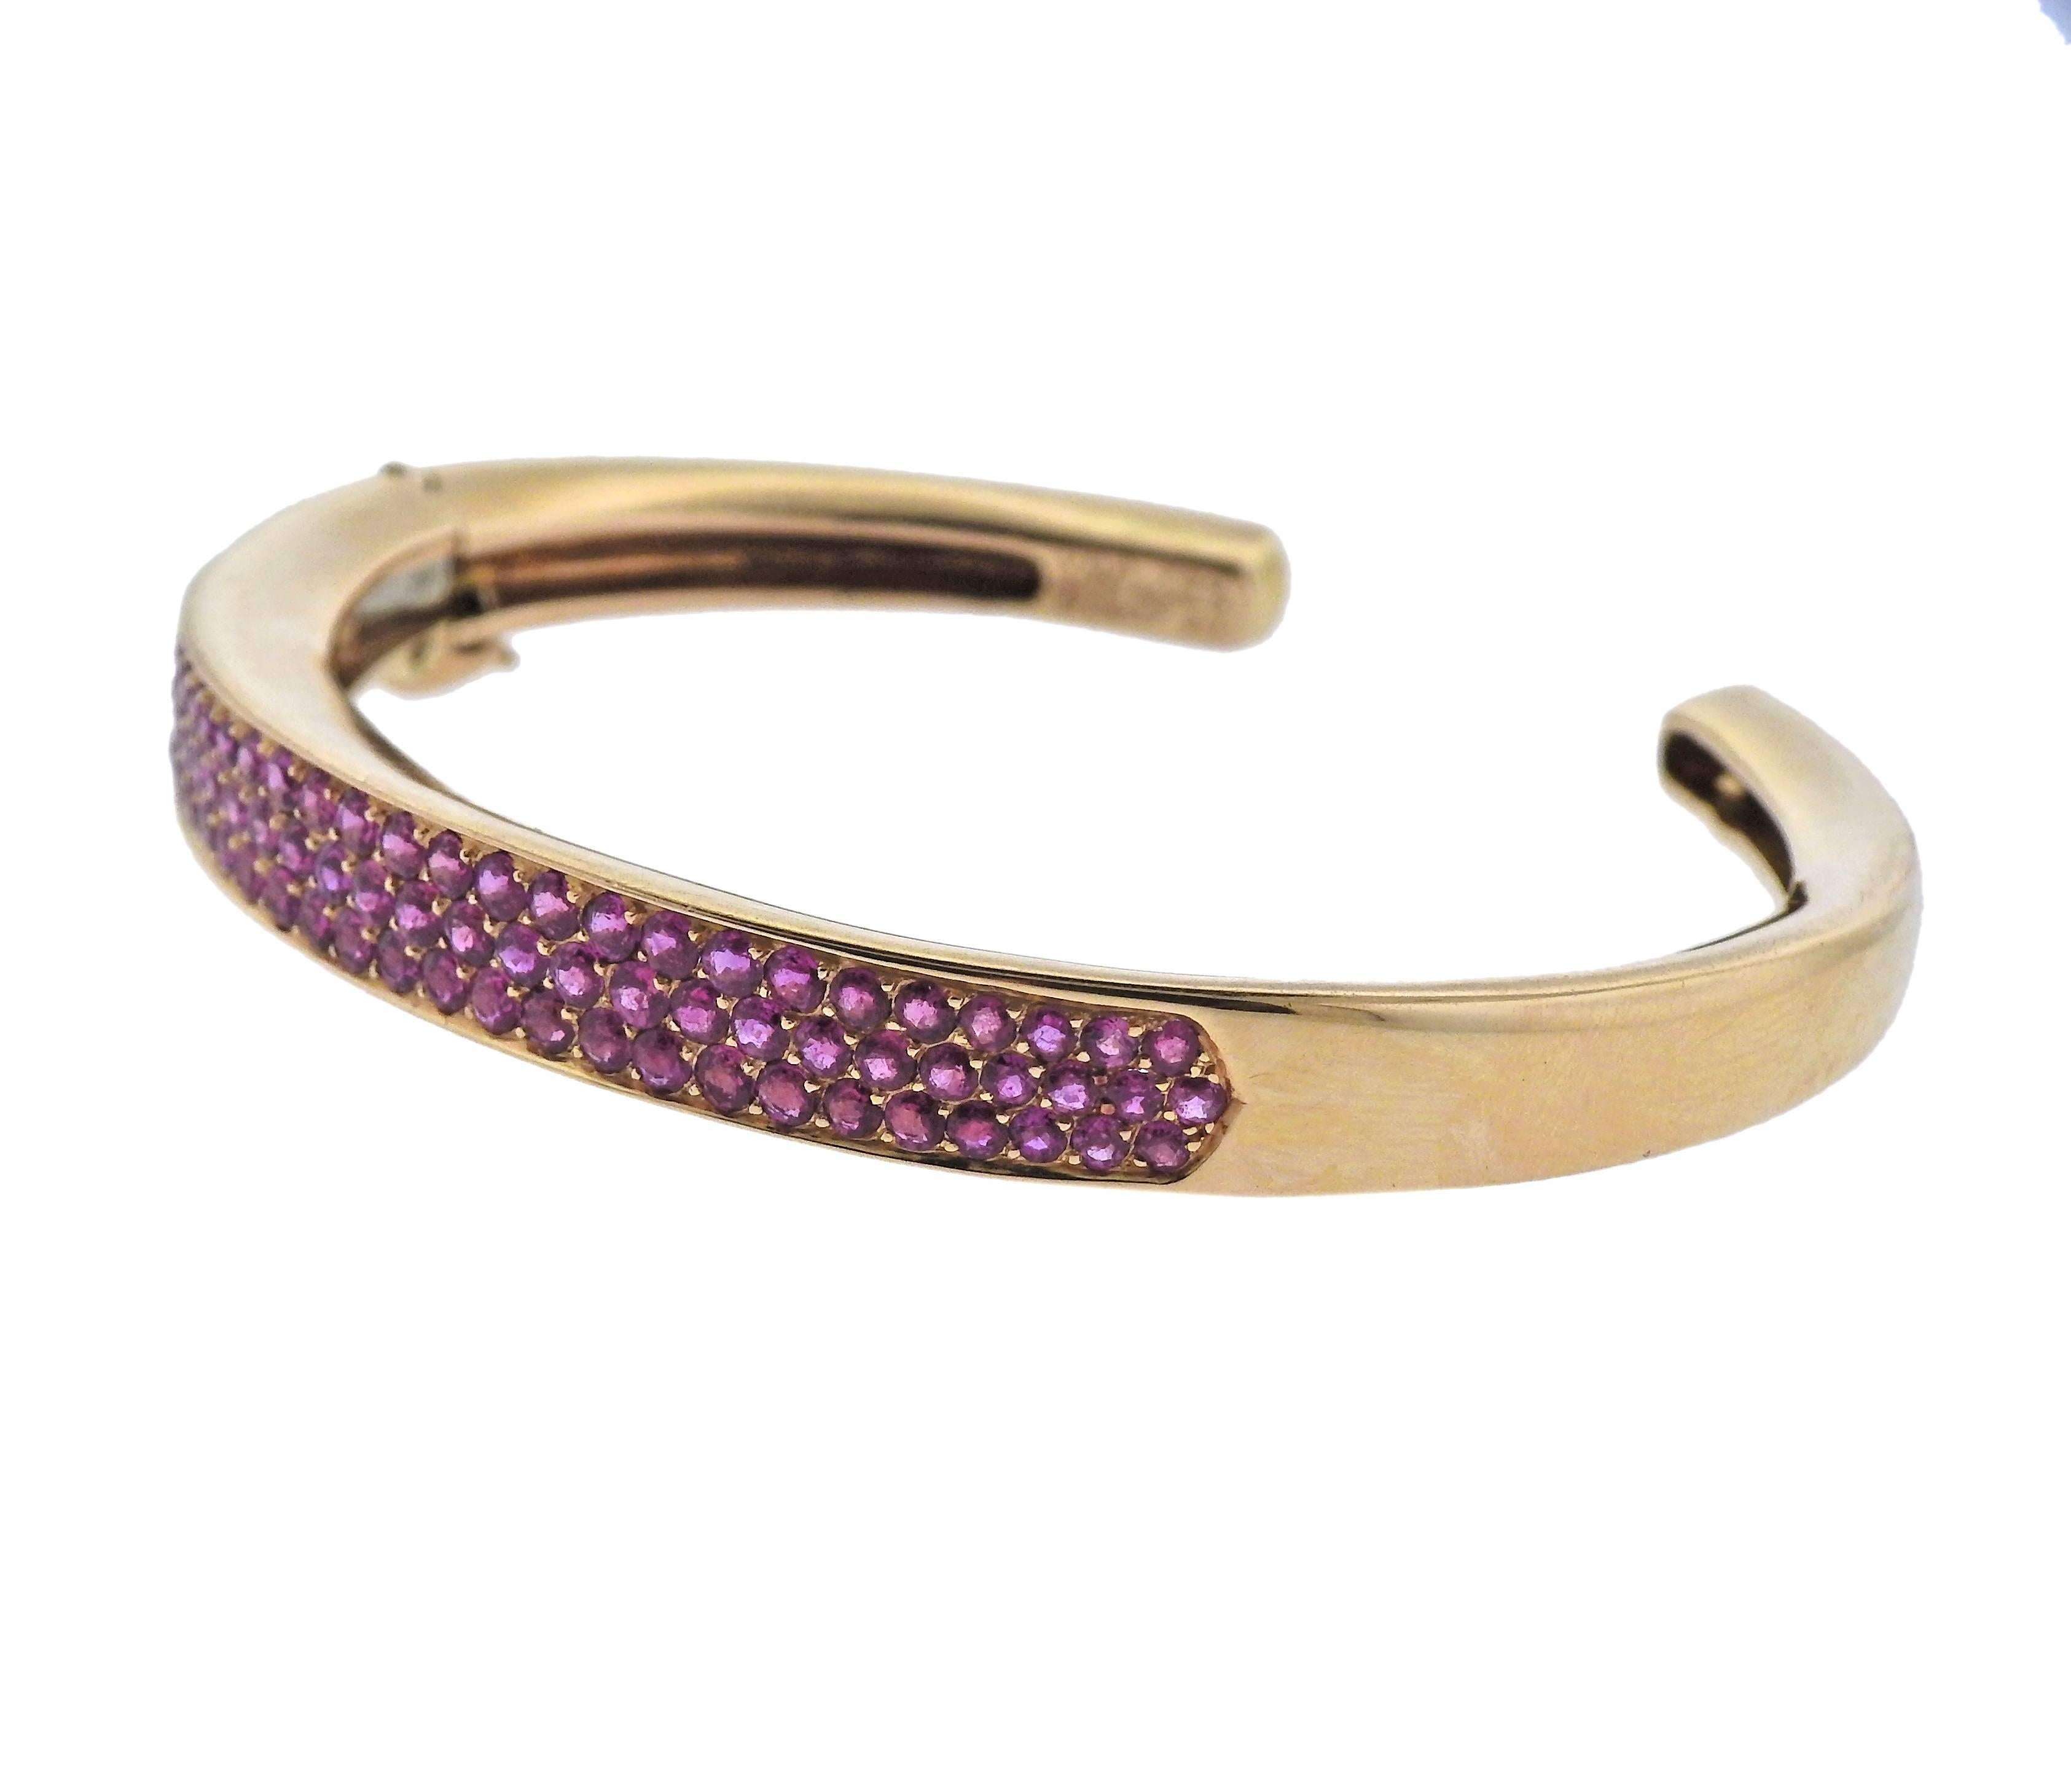 Vintage 18k gold cuff bracelet by Van Cleef & Arpels, set with pink sapphire gemstones.  Bracelet will fit approx. 7